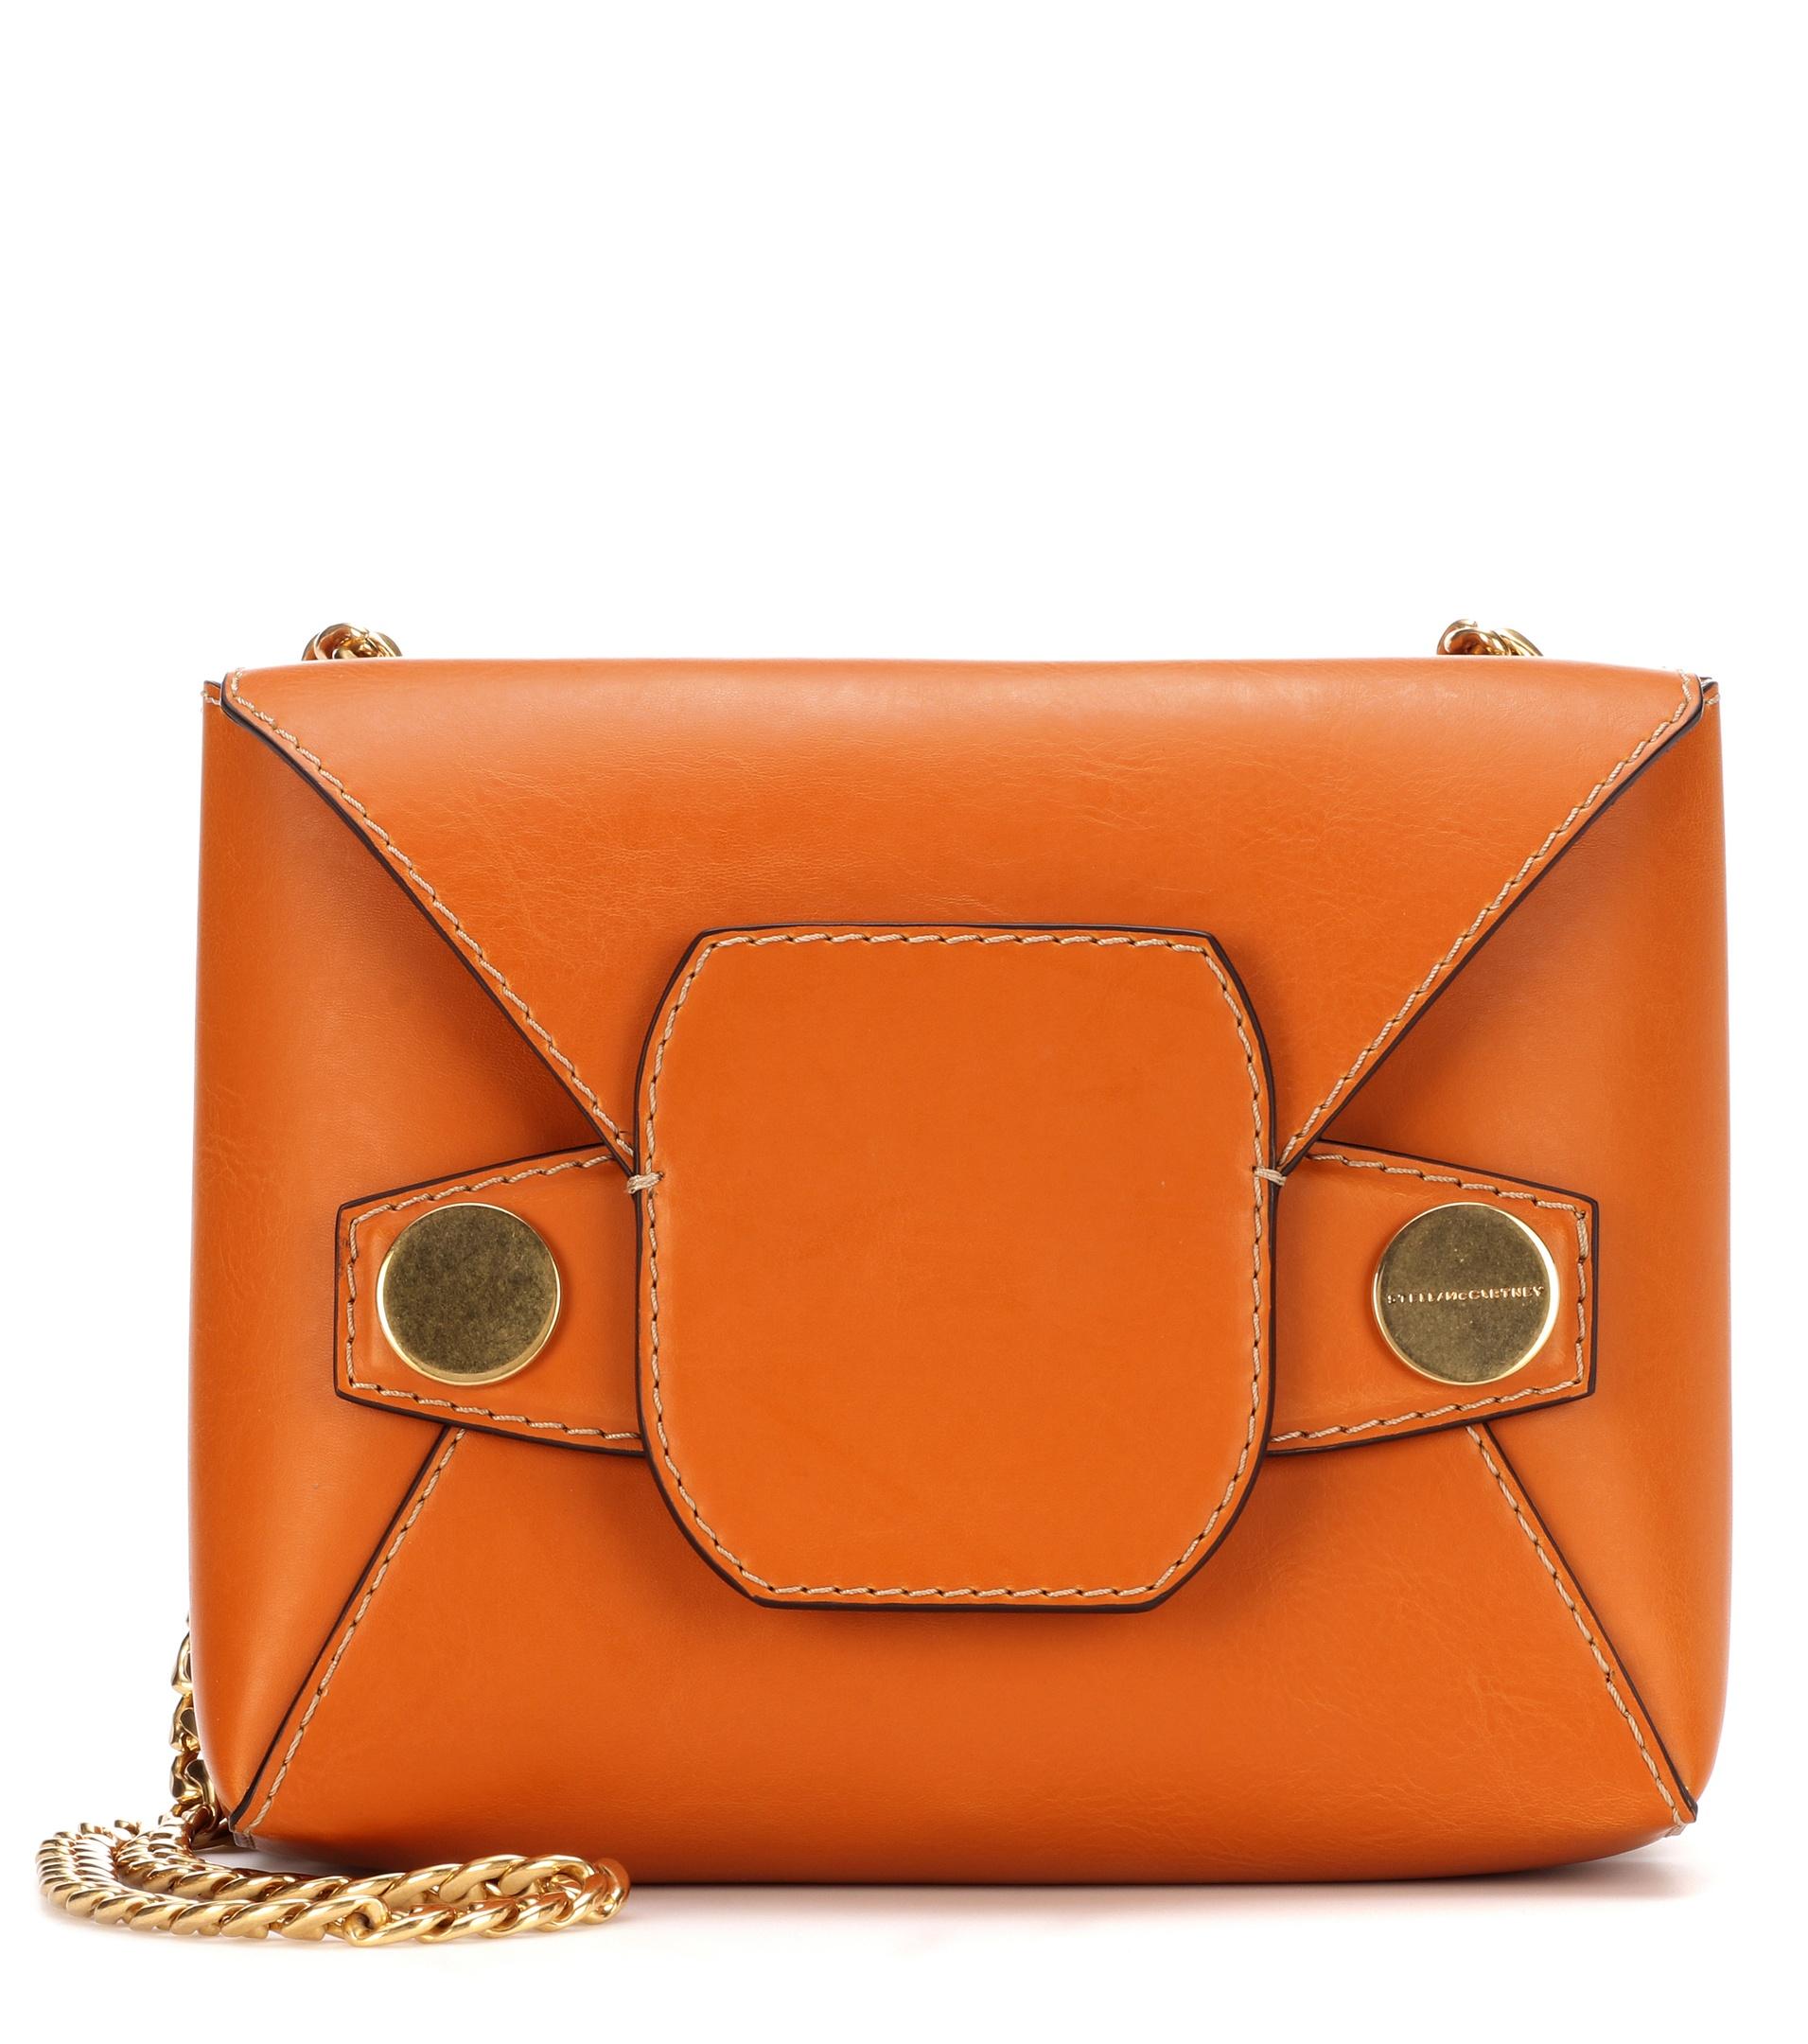 Stella McCartney Stella Popper Small Faux-leather Shoulder Bag in Orange - Lyst